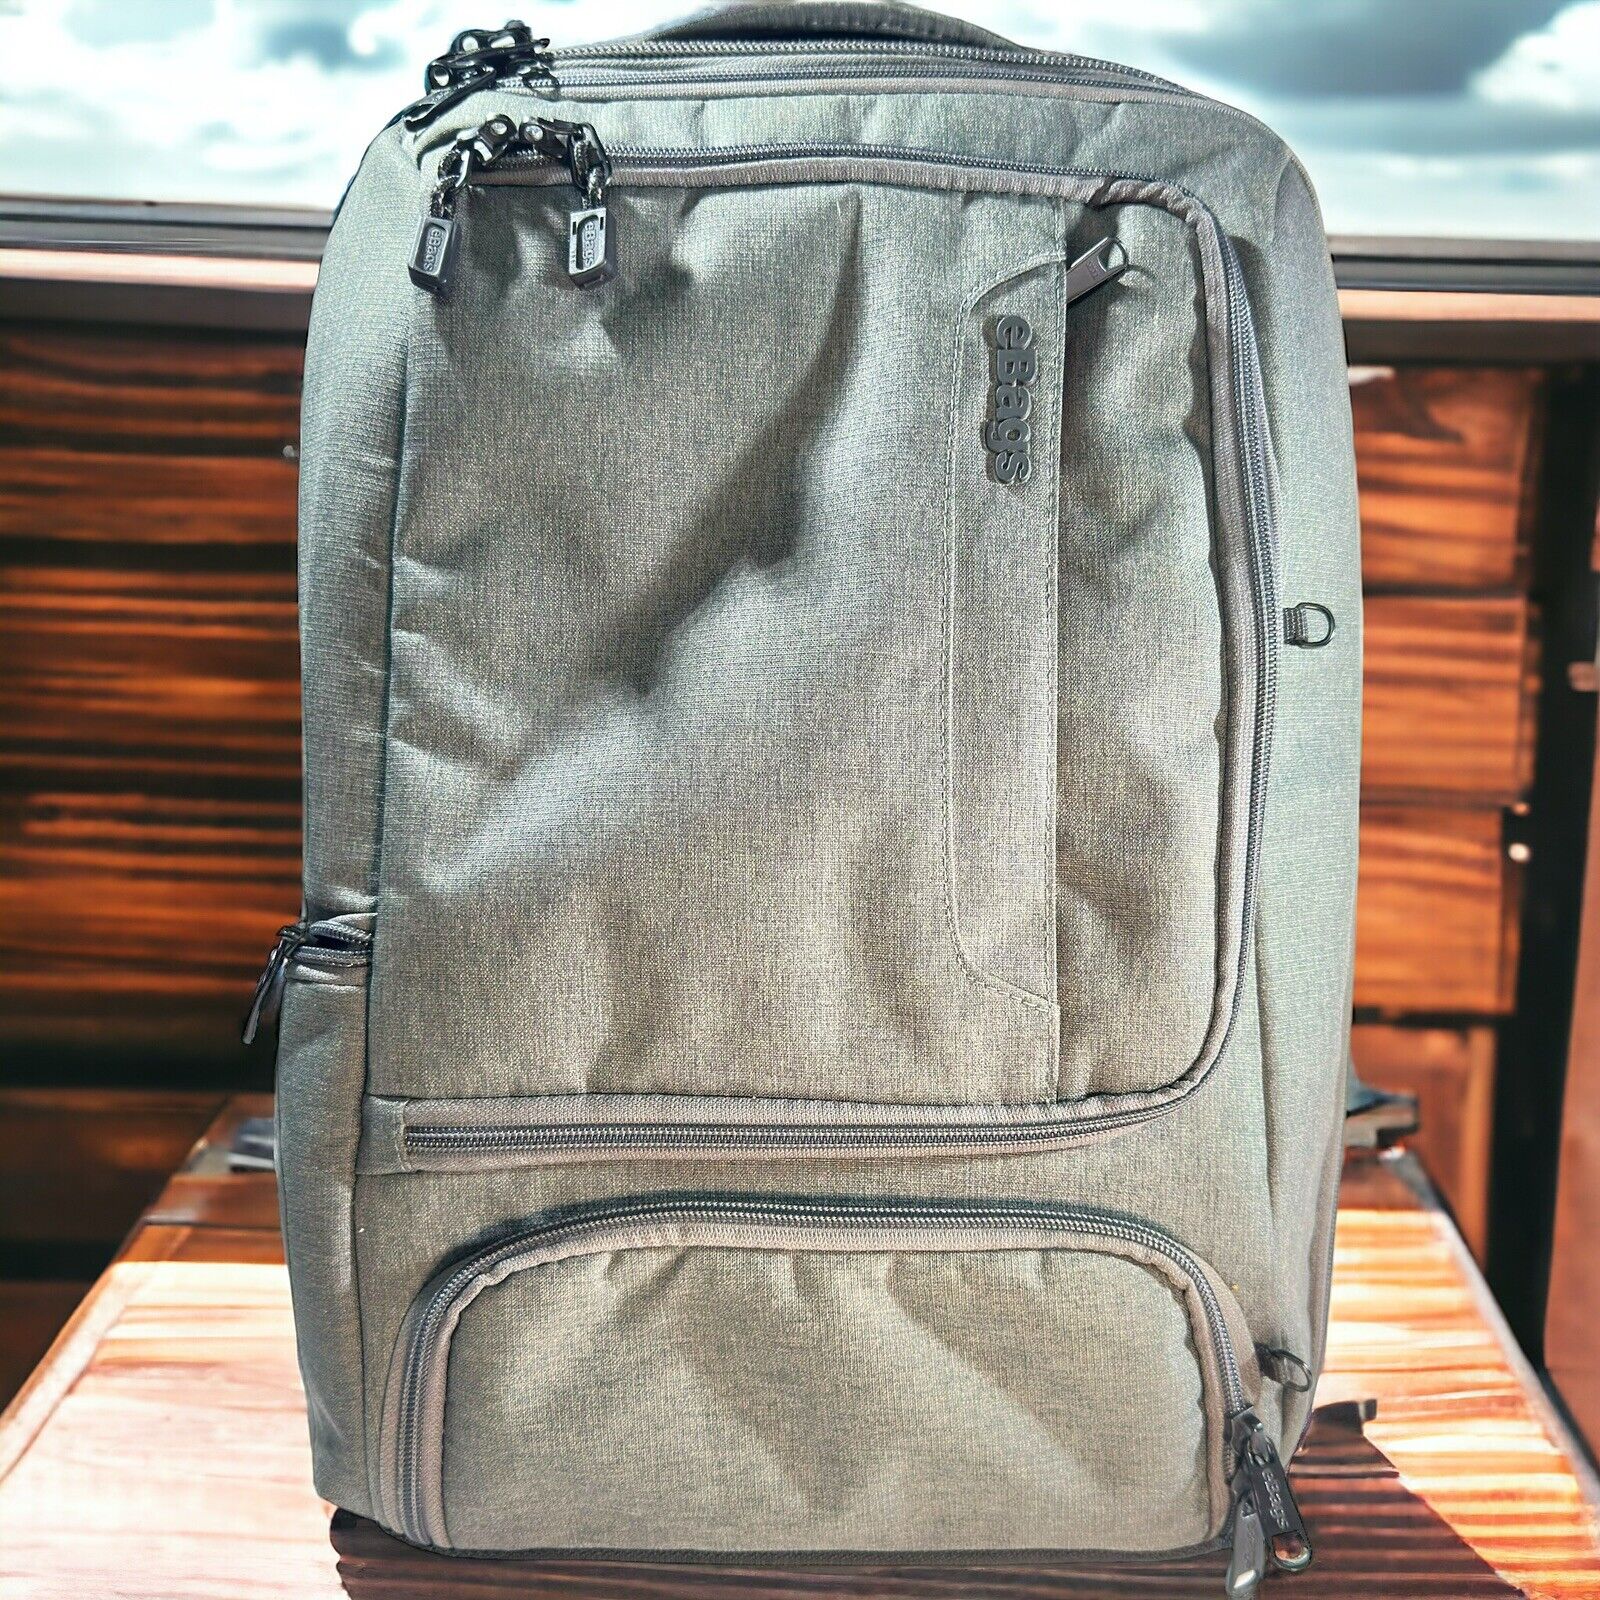 eBags Professional Slim Laptop Backpack - Heathered Graphite